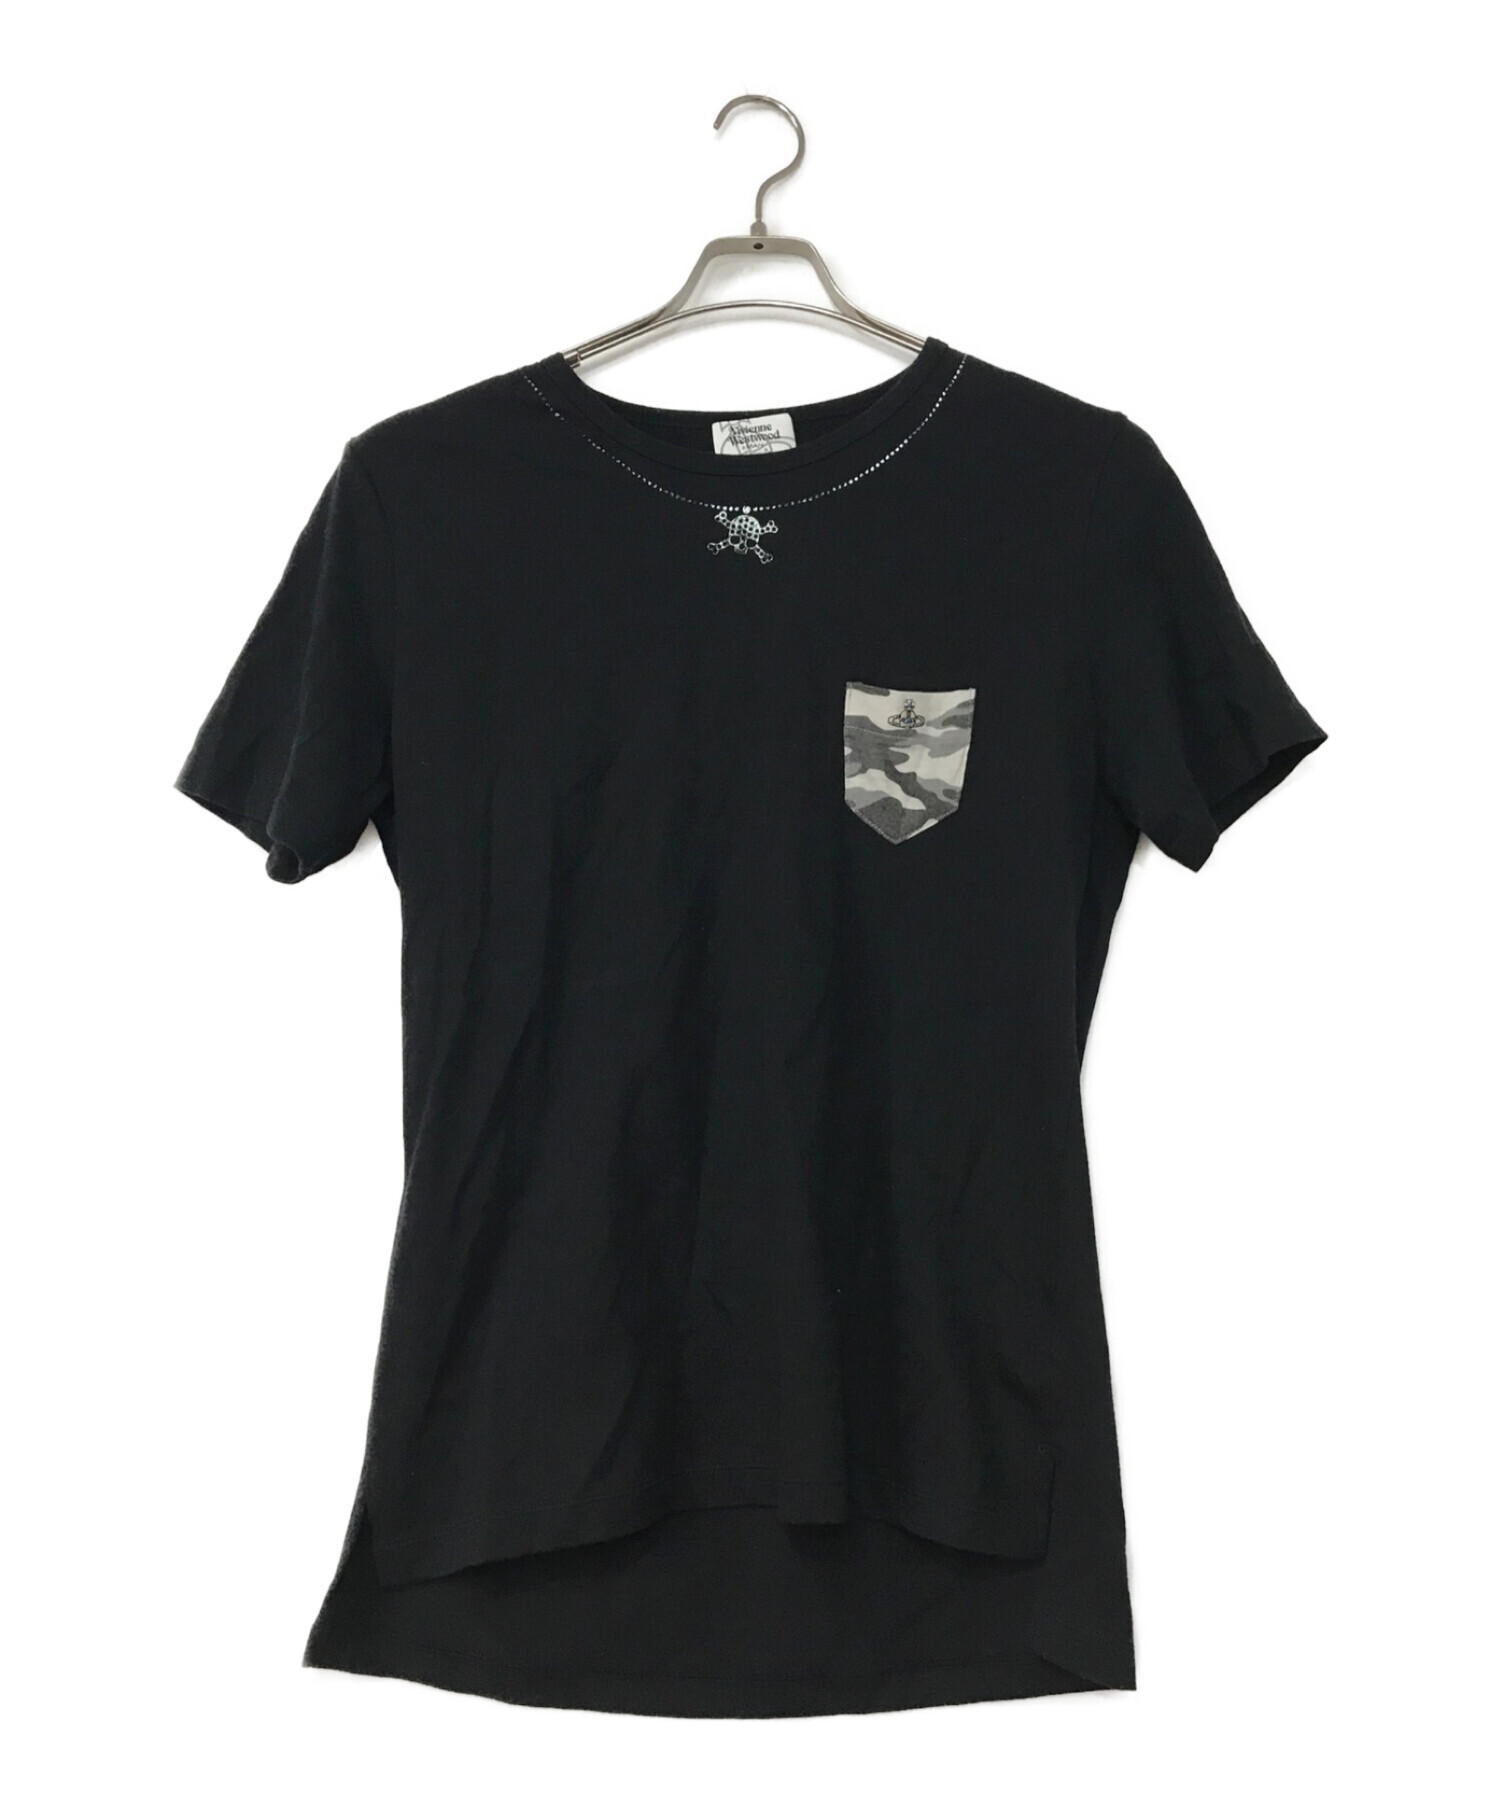 Vivienne Westwood man (ヴィヴィアン ウェストウッド マン) ポケットTシャツ ブラック サイズ:50